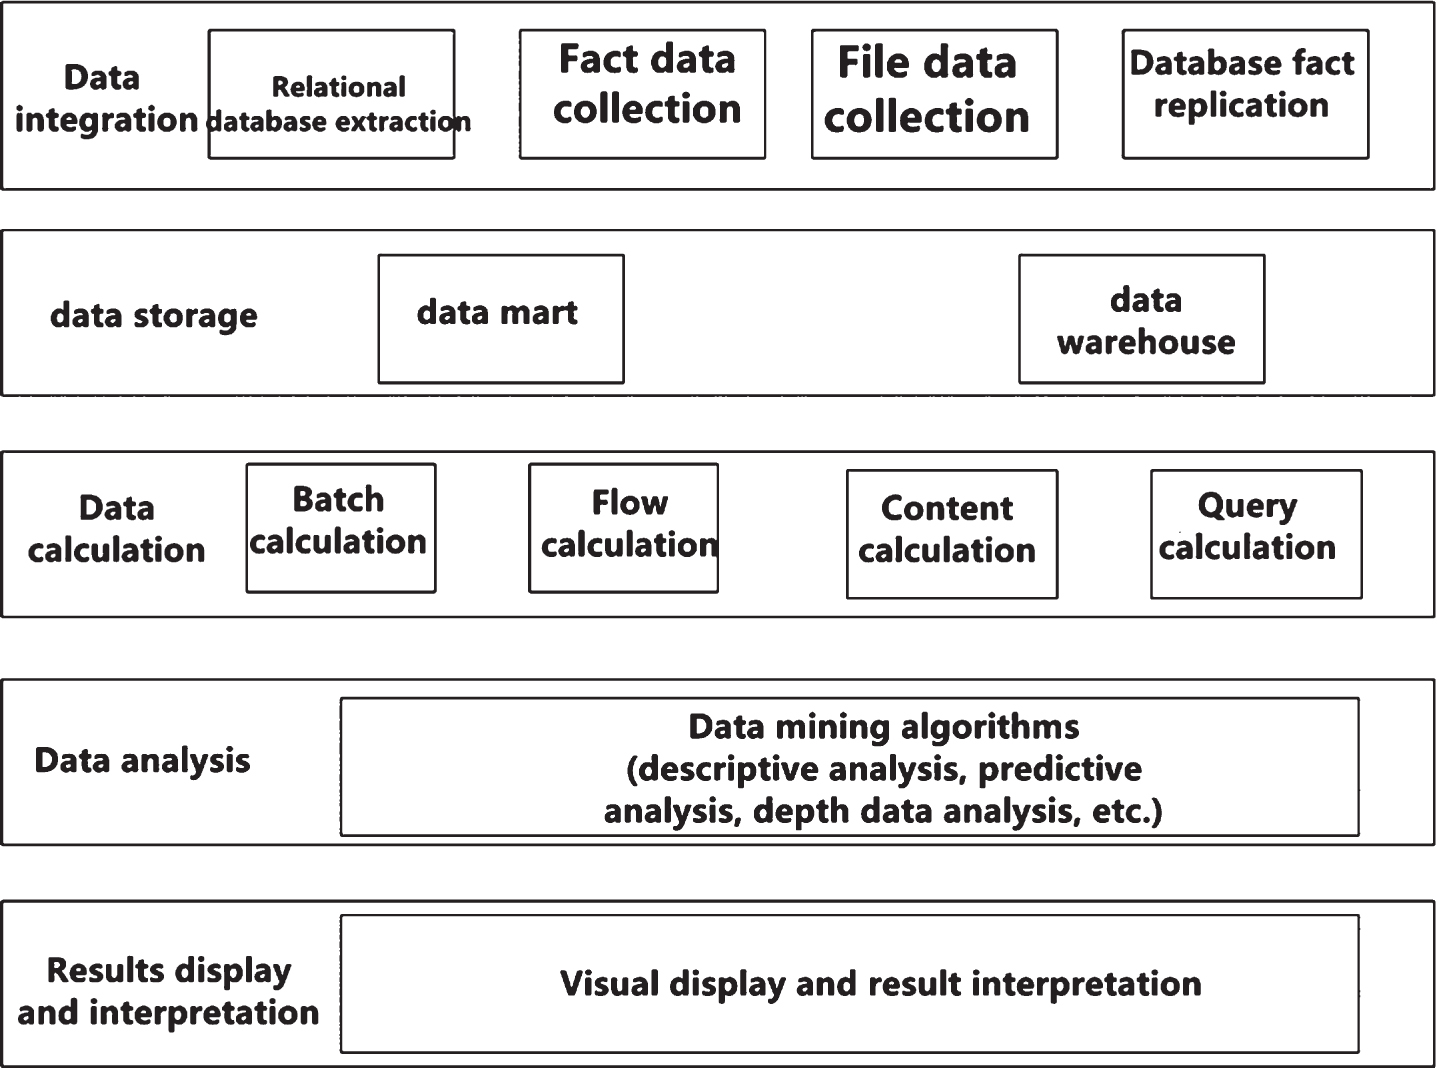 Basic framework of data analysis platform.